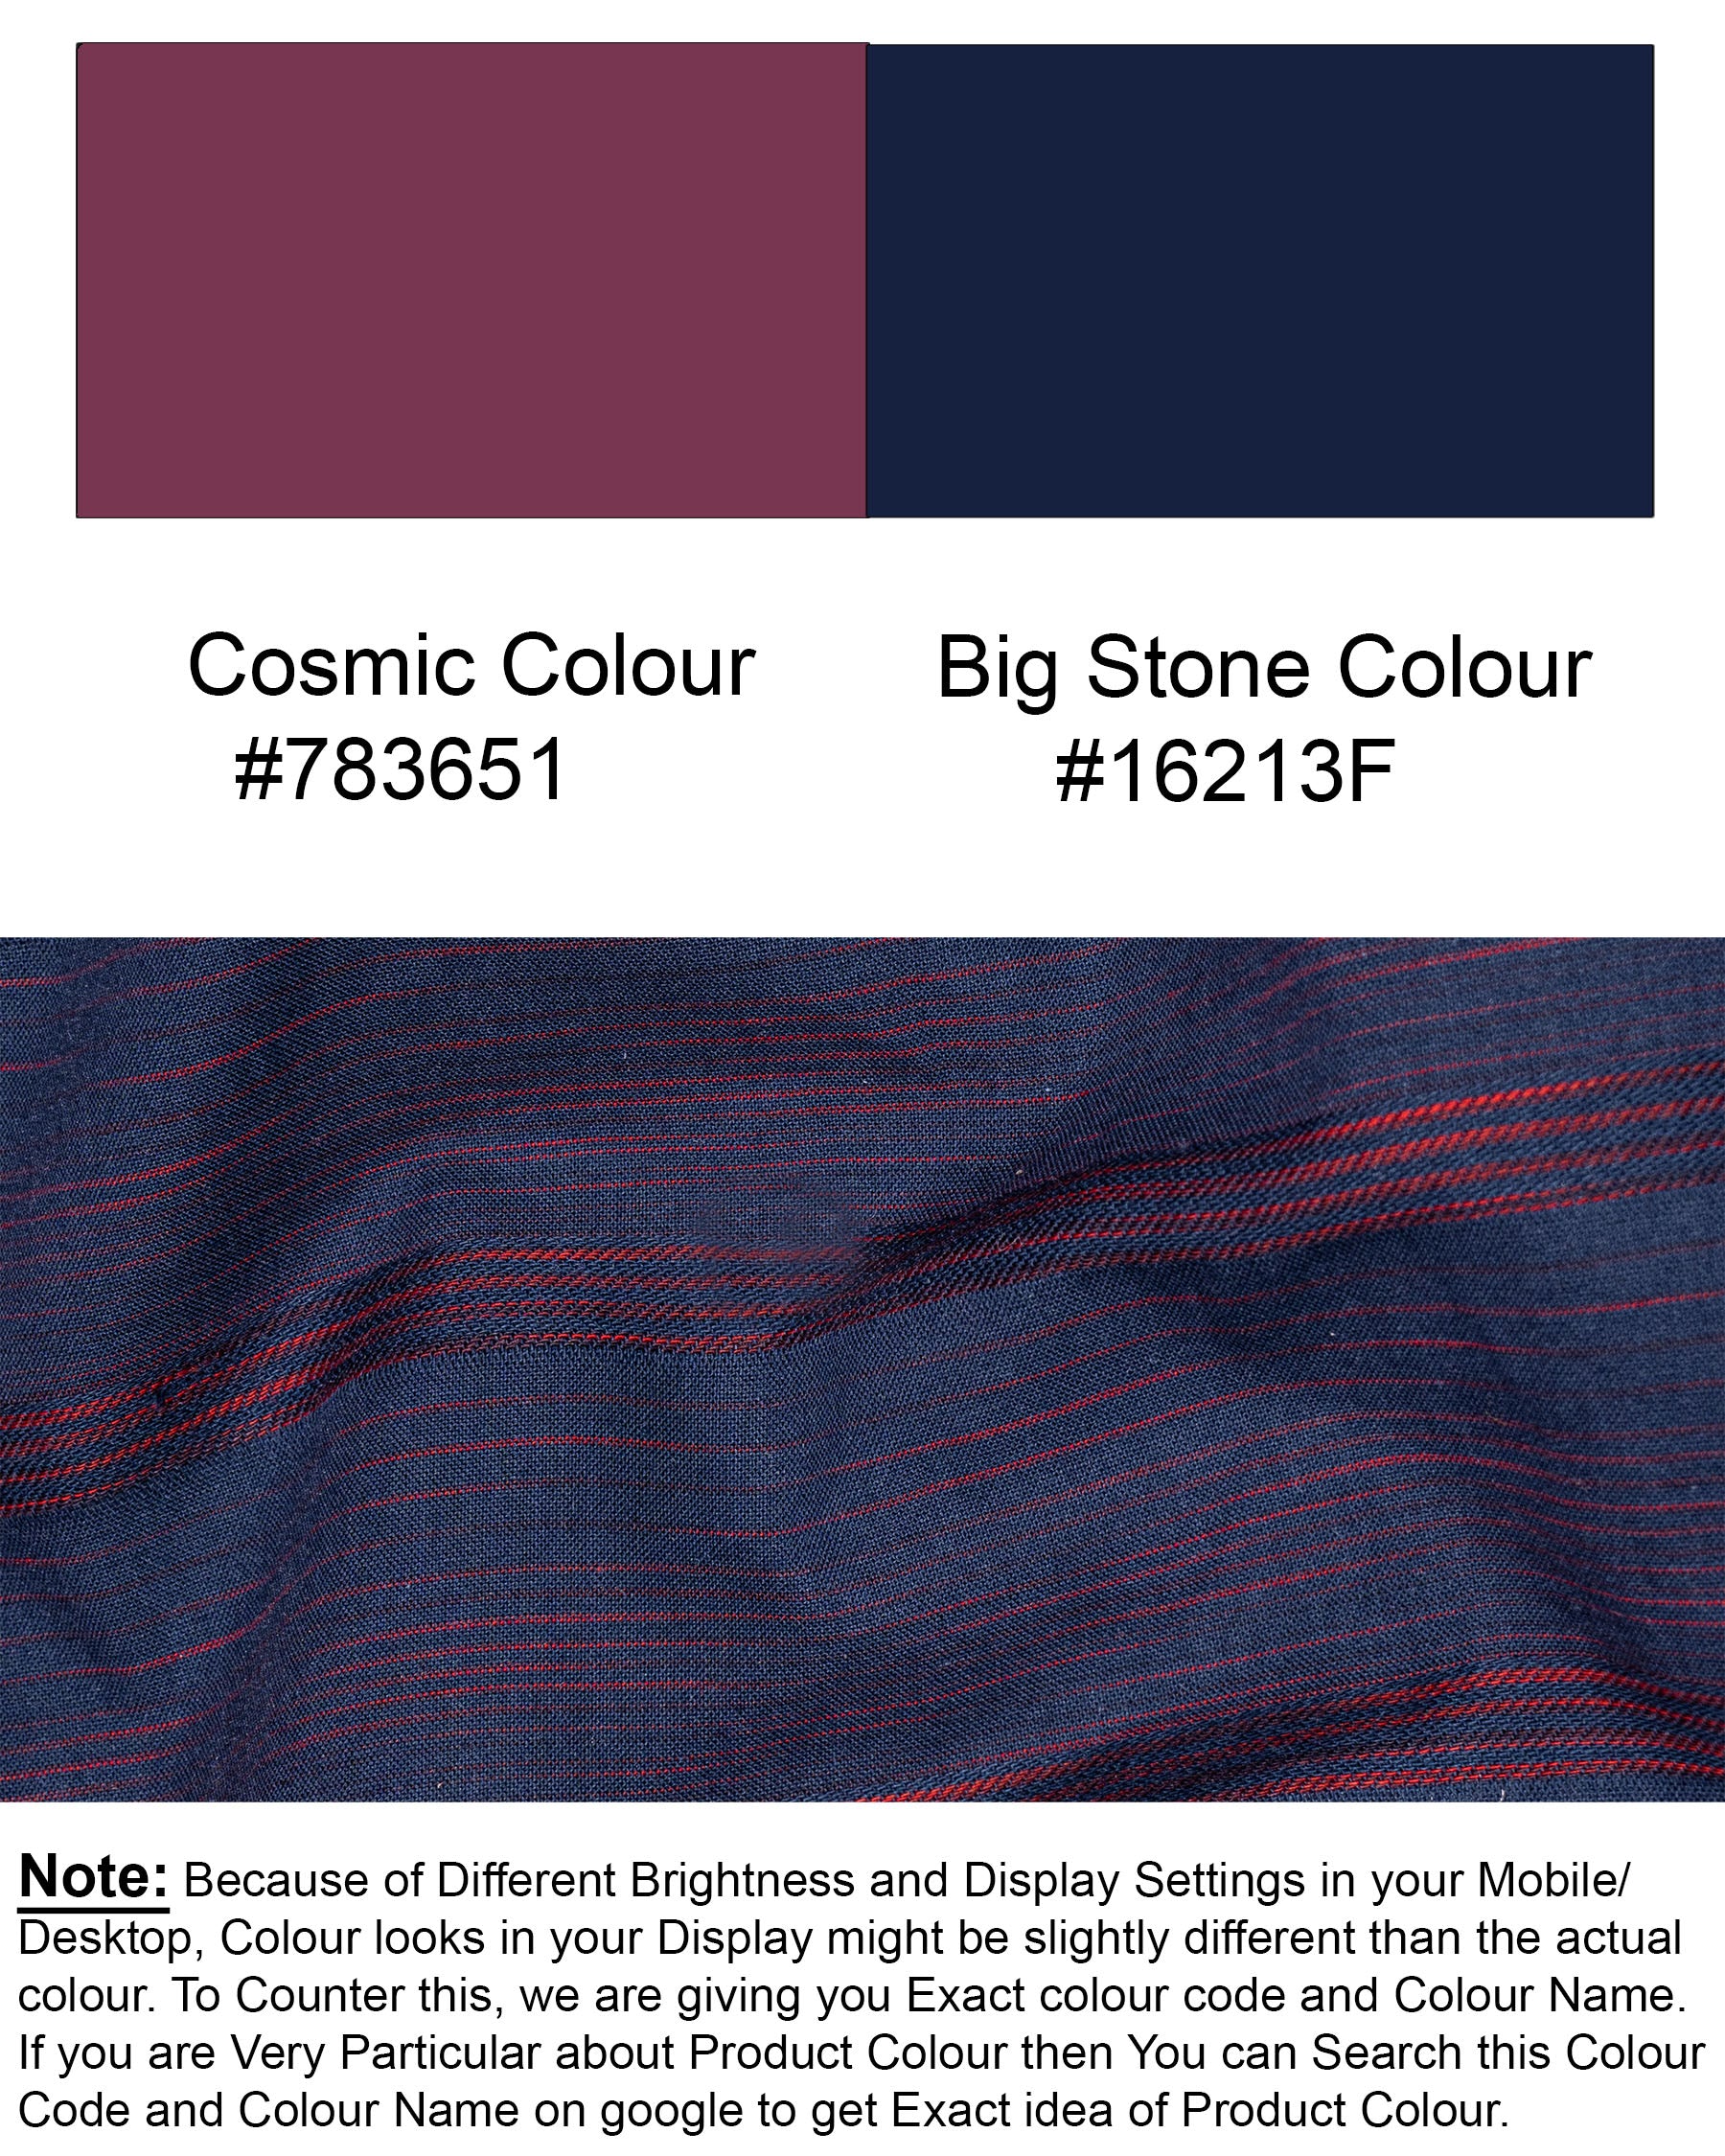 Big Stone Blue with Red Striped Dobby Premium Giza Cotton Shirt 6194-BD-MN-38, 6194-BD-MN-H-38, 6194-BD-MN-39, 6194-BD-MN-H-39, 6194-BD-MN-40, 6194-BD-MN-H-40, 6194-BD-MN-42, 6194-BD-MN-H-42, 6194-BD-MN-44, 6194-BD-MN-H-44, 6194-BD-MN-46, 6194-BD-MN-H-46, 6194-BD-MN-48, 6194-BD-MN-H-48, 6194-BD-MN-50, 6194-BD-MN-H-50, 6194-BD-MN-52, 6194-BD-MN-H-52